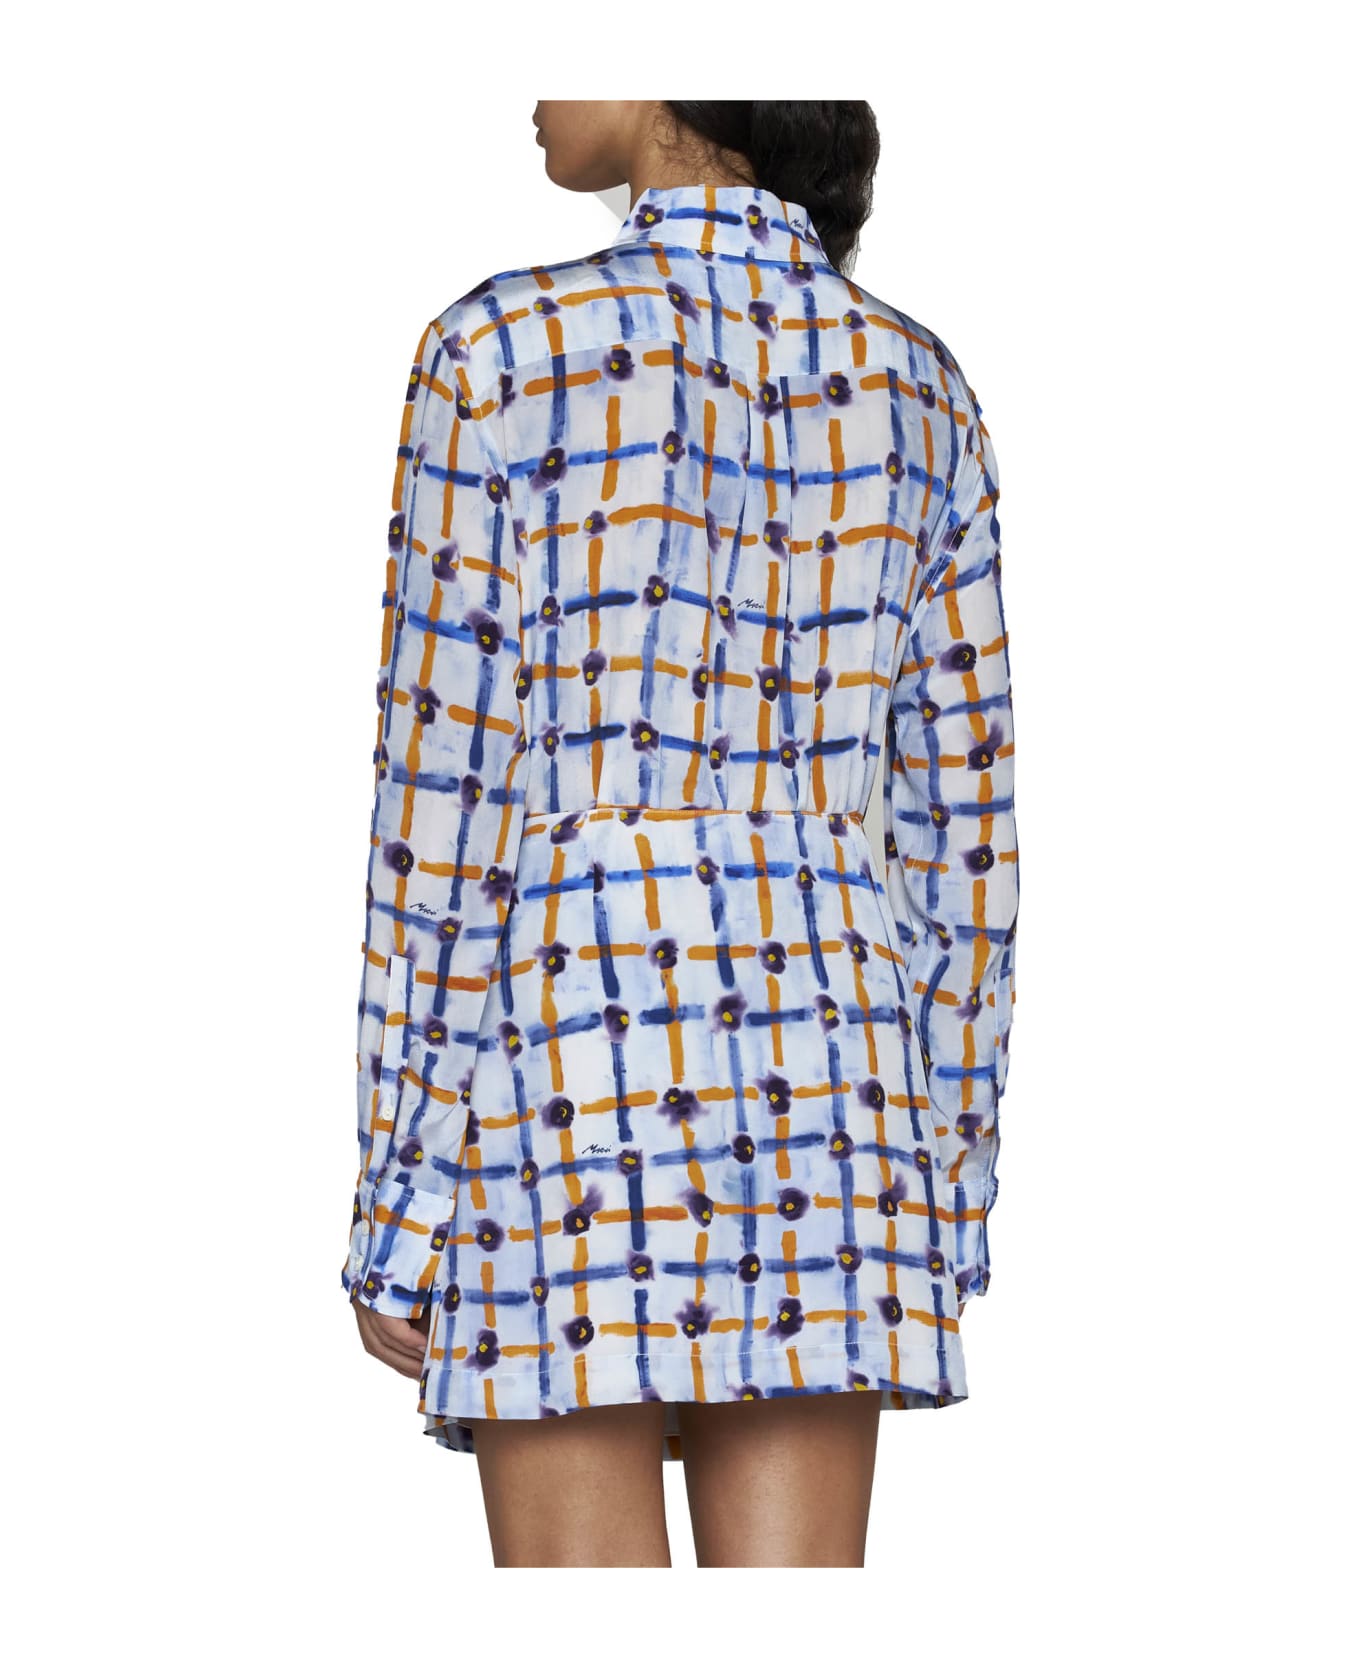 Marni Skirt - Light blue スカート